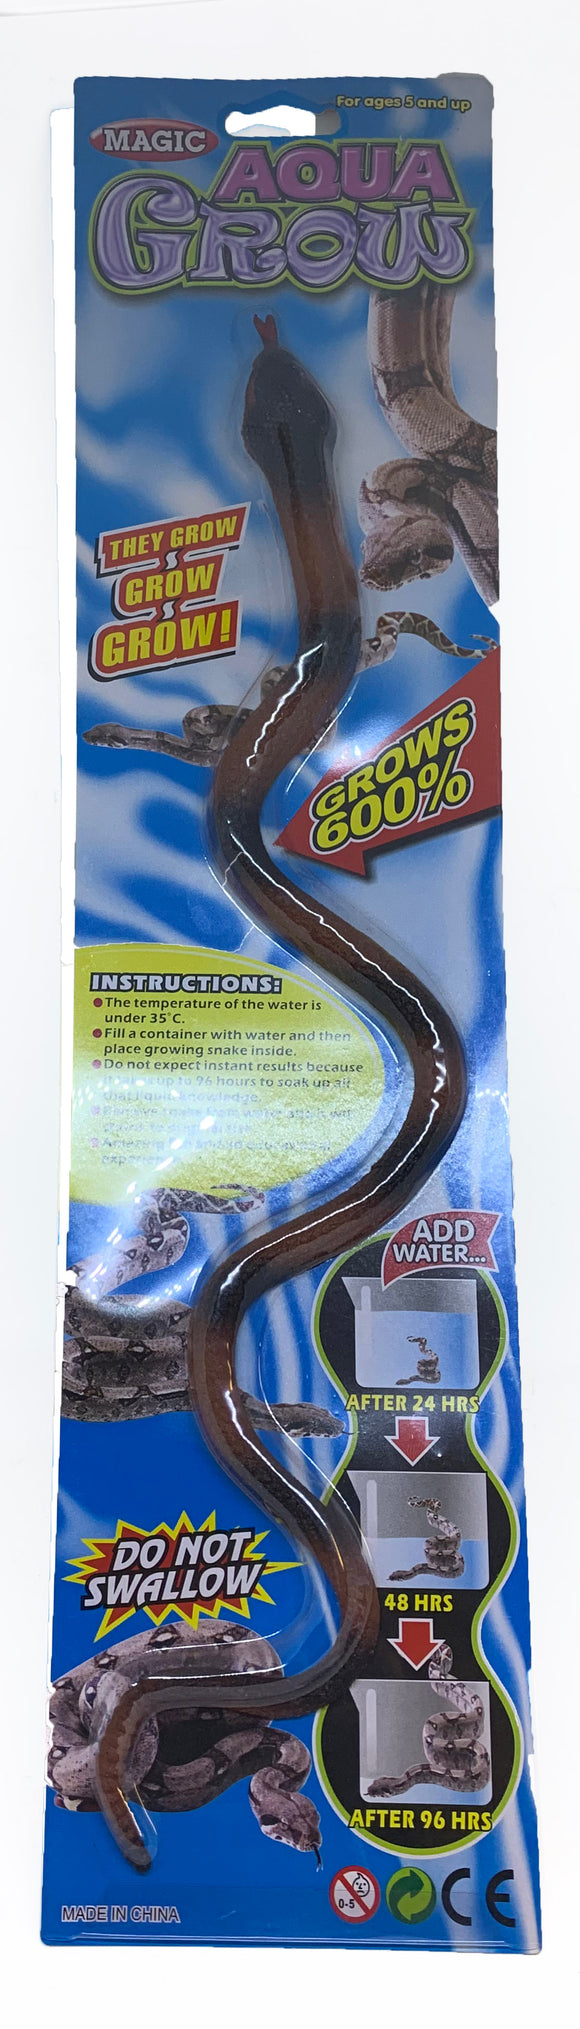 Magic Aqua Growing Snake